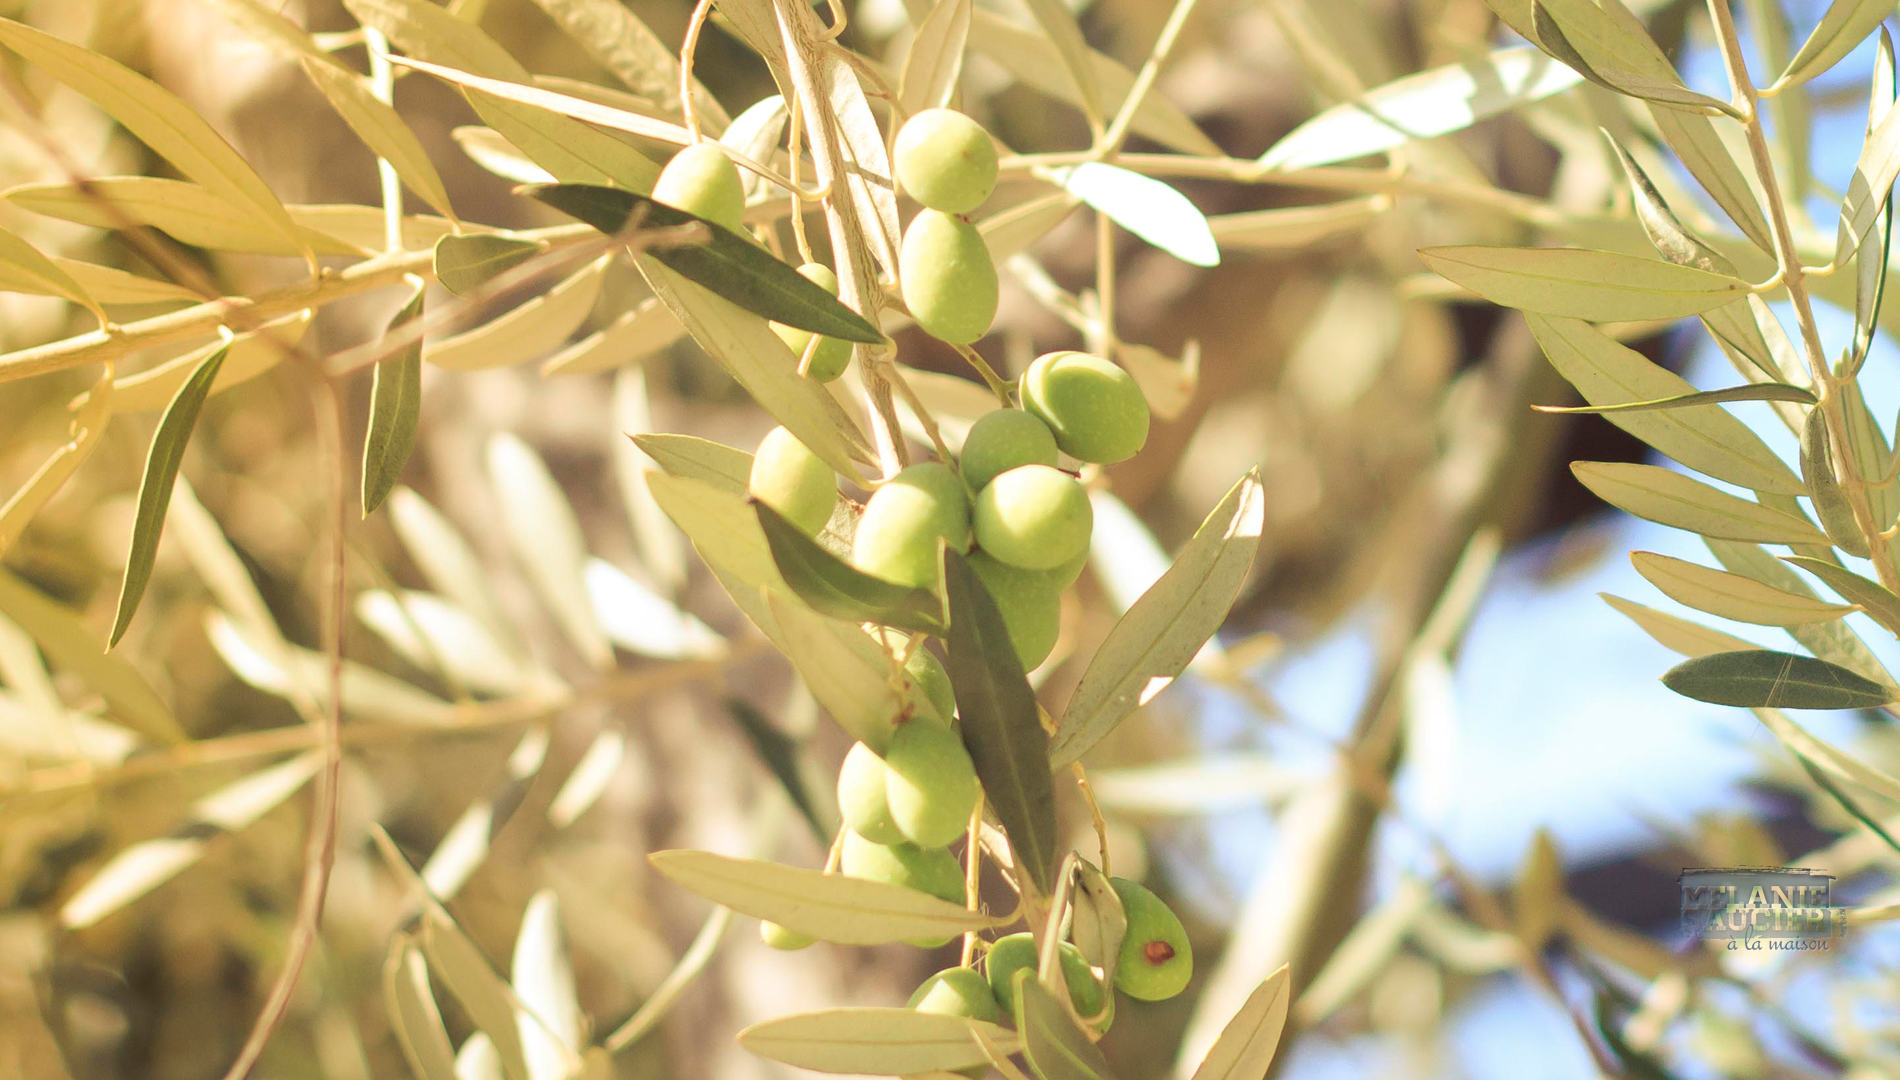 Wallpaper Friday Olive Tree